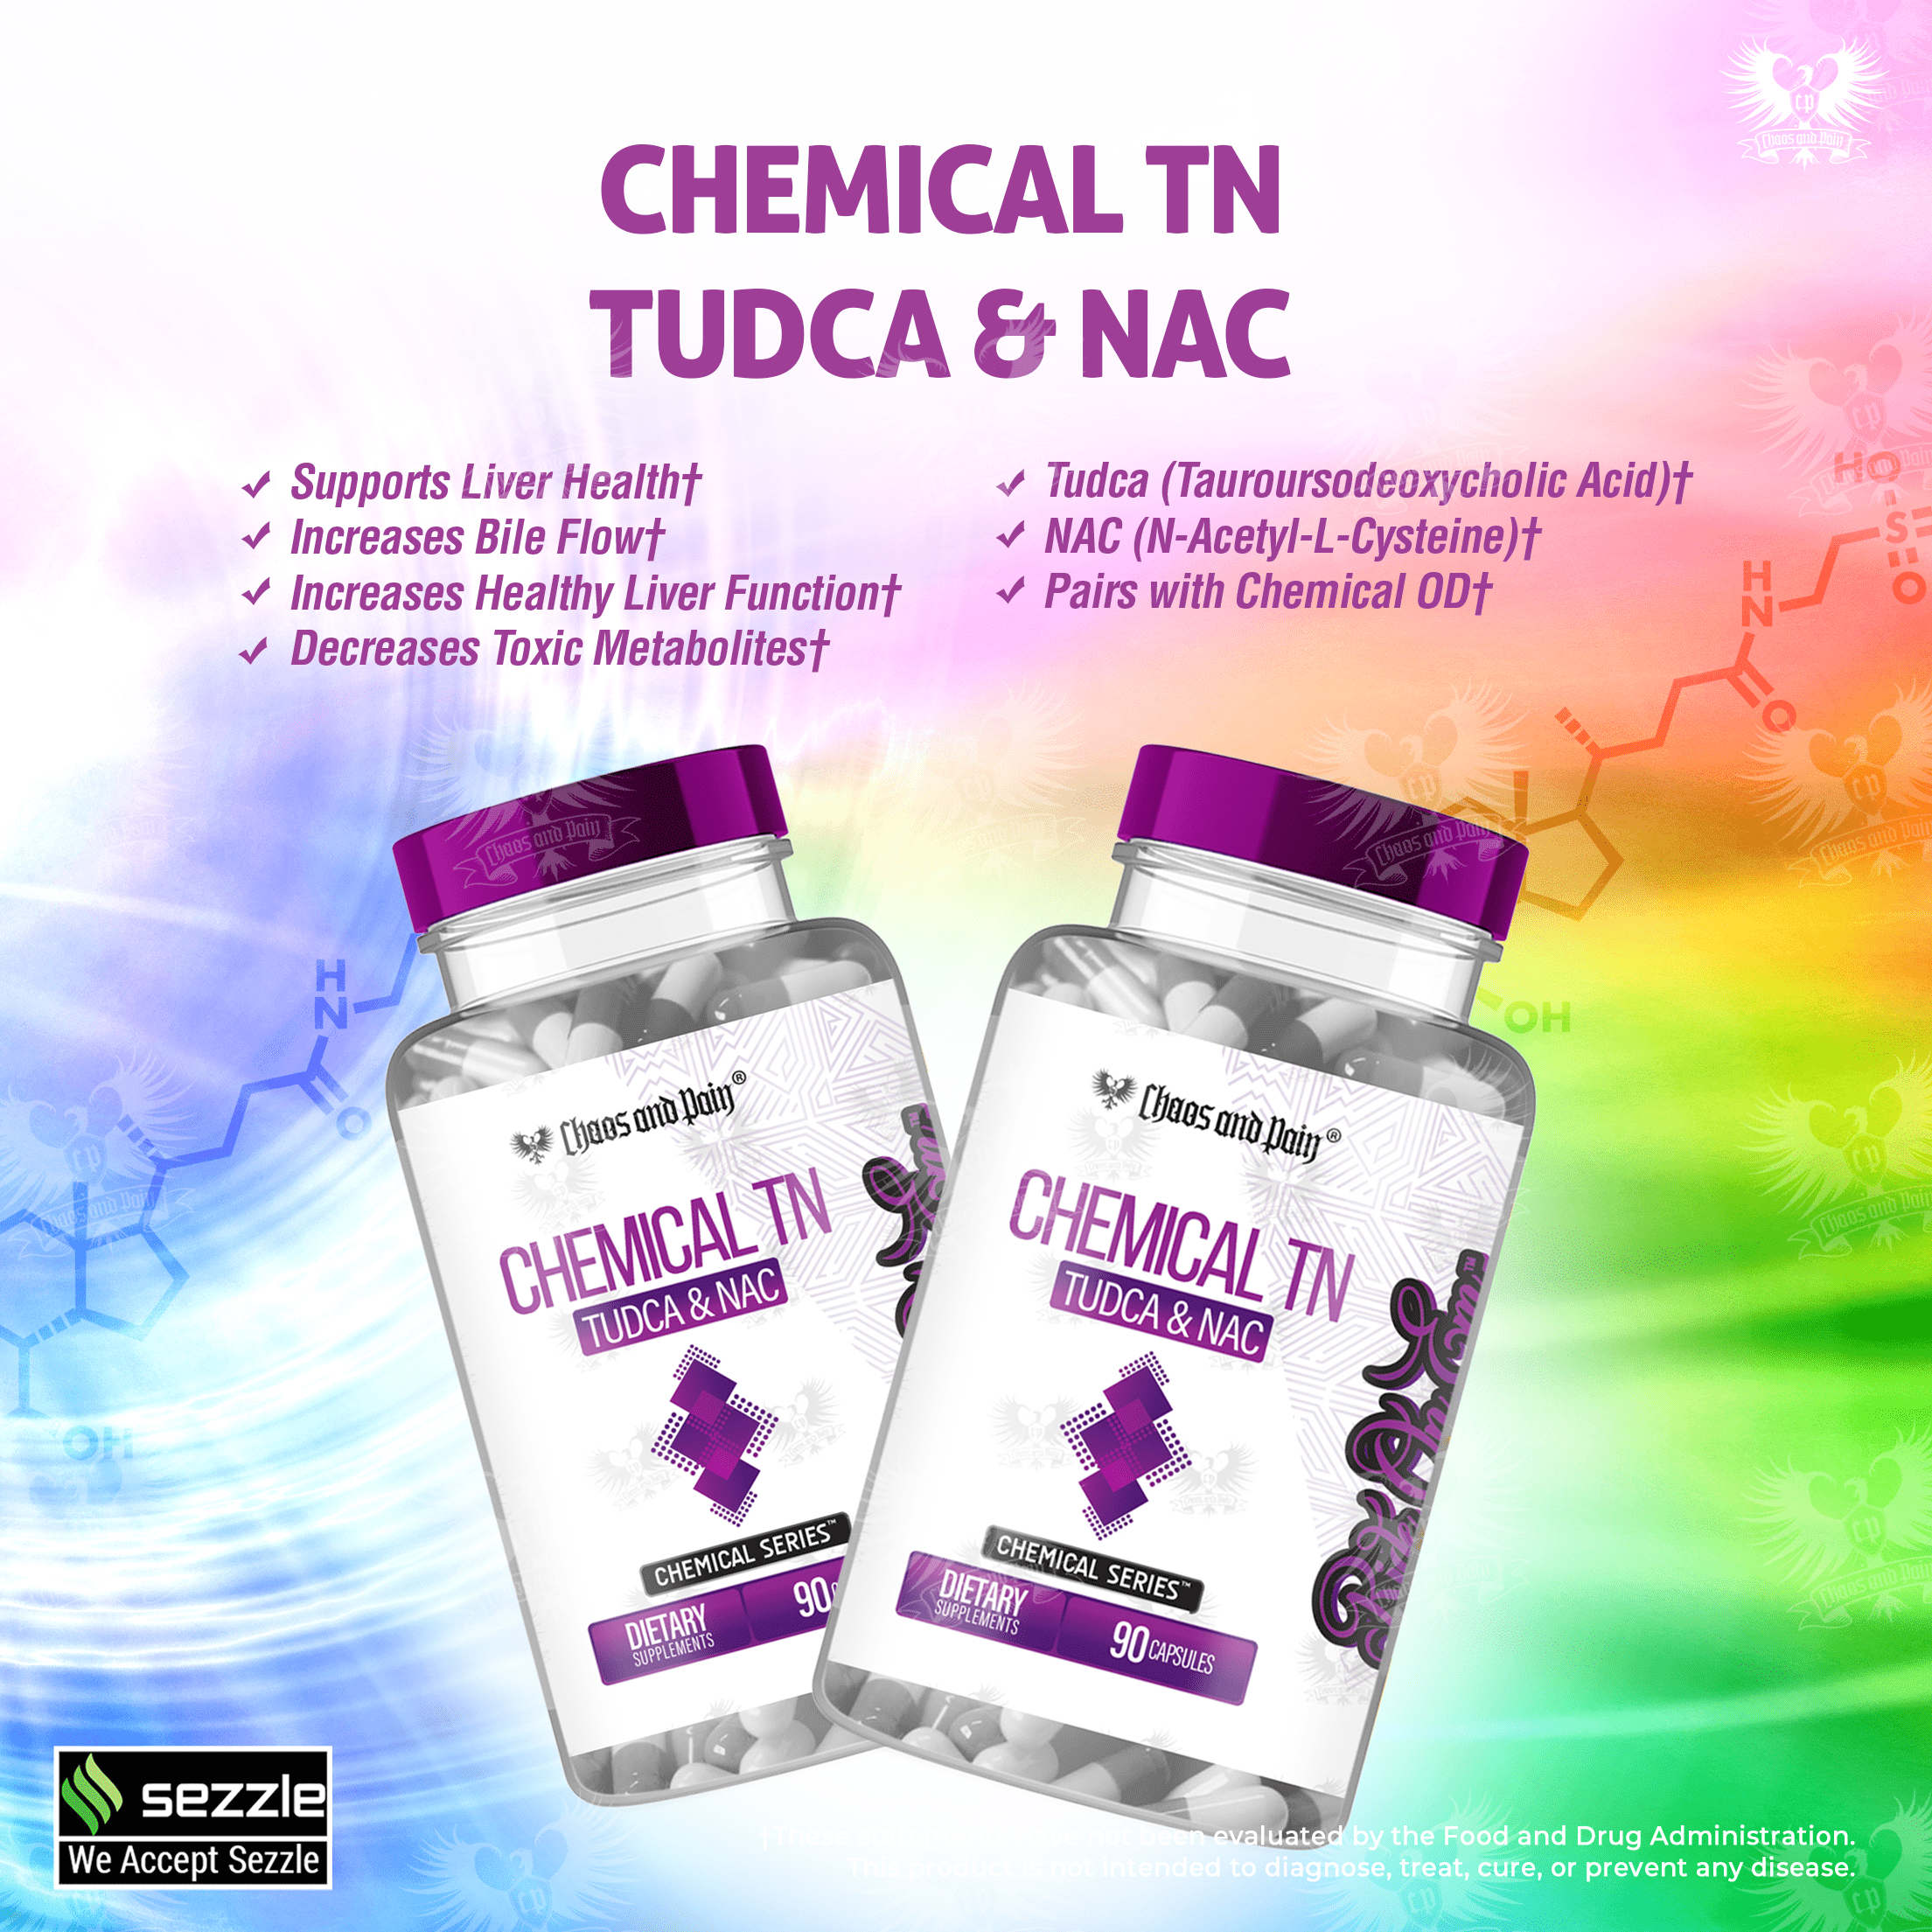 Chemical TN - Tudca and NAC